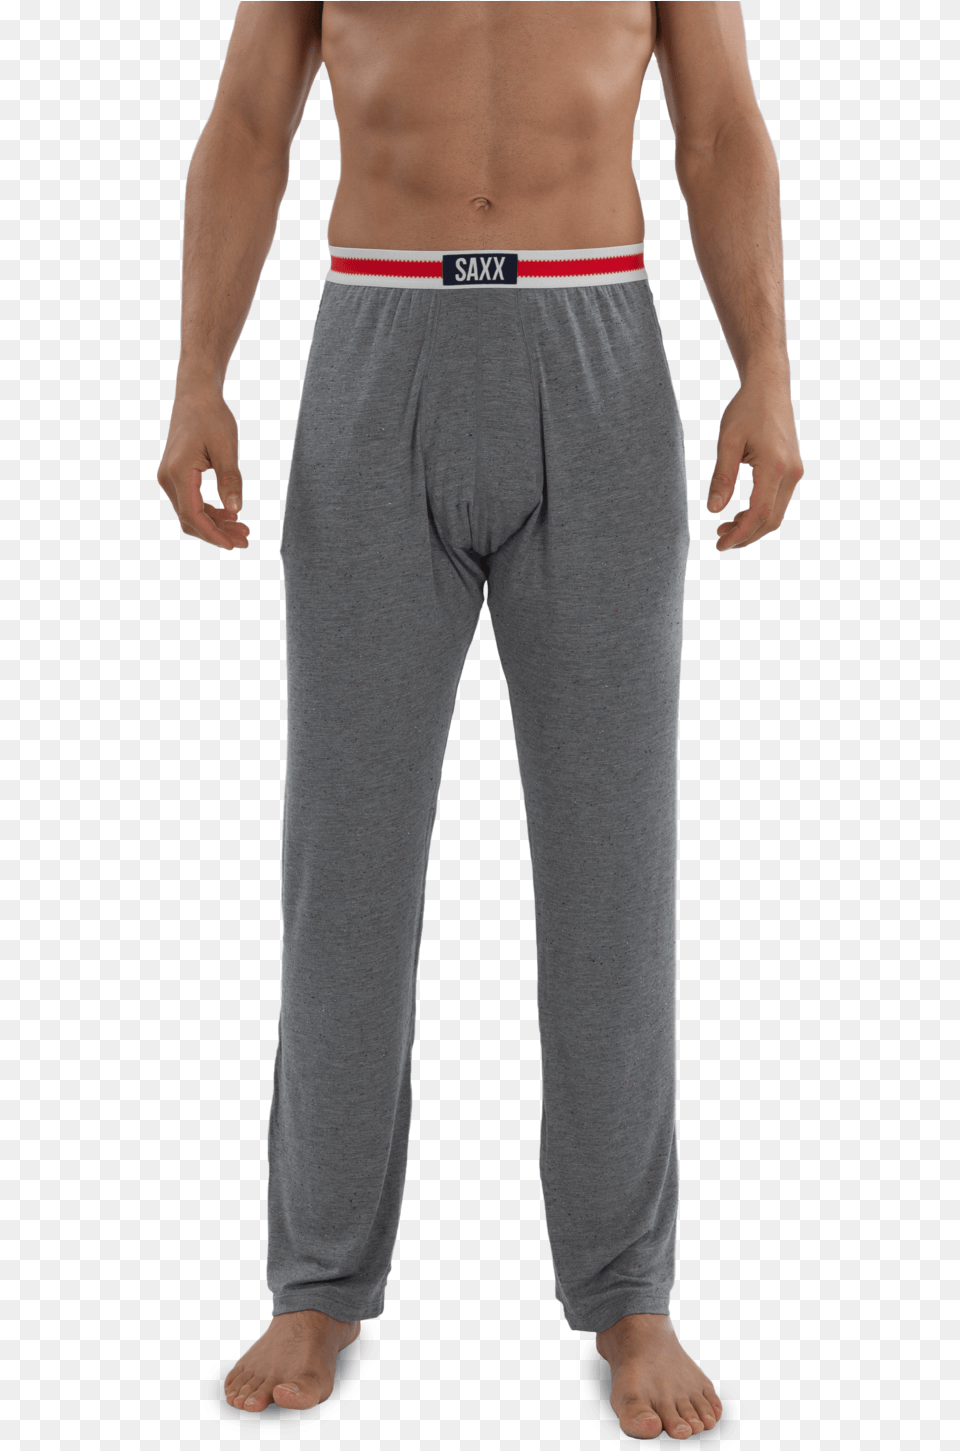 Sleepwalker Pant Saxx Sxlw32 Gsm, Clothing, Pants, Adult, Male Png Image